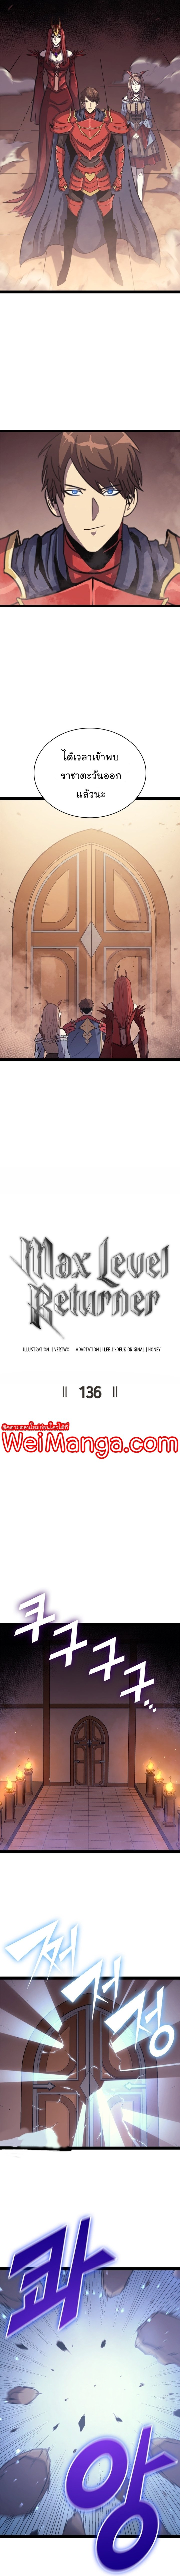 Max Level Returner 136 05